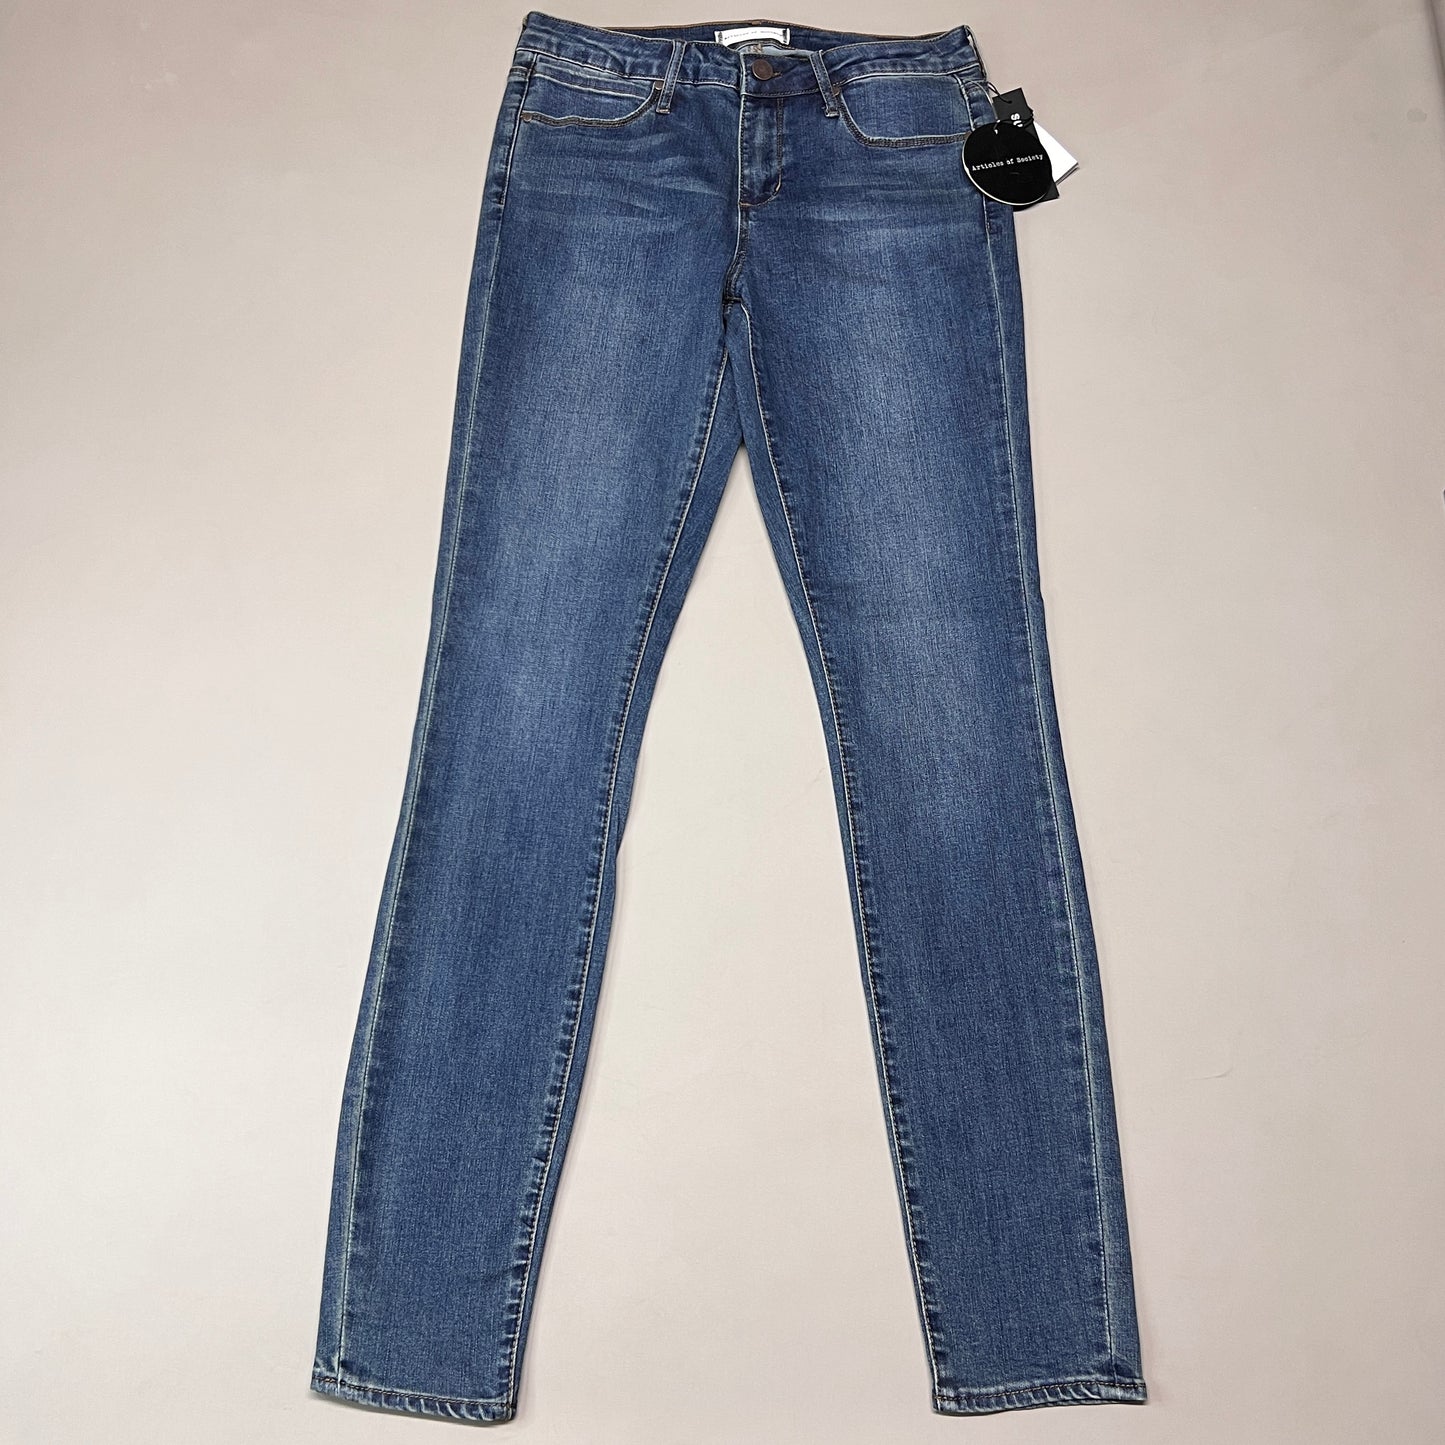 ARTICLES OF SOCIETY Aiea Denim Jeans Women's Sz 28 Blue 5352PLV-701 (New)